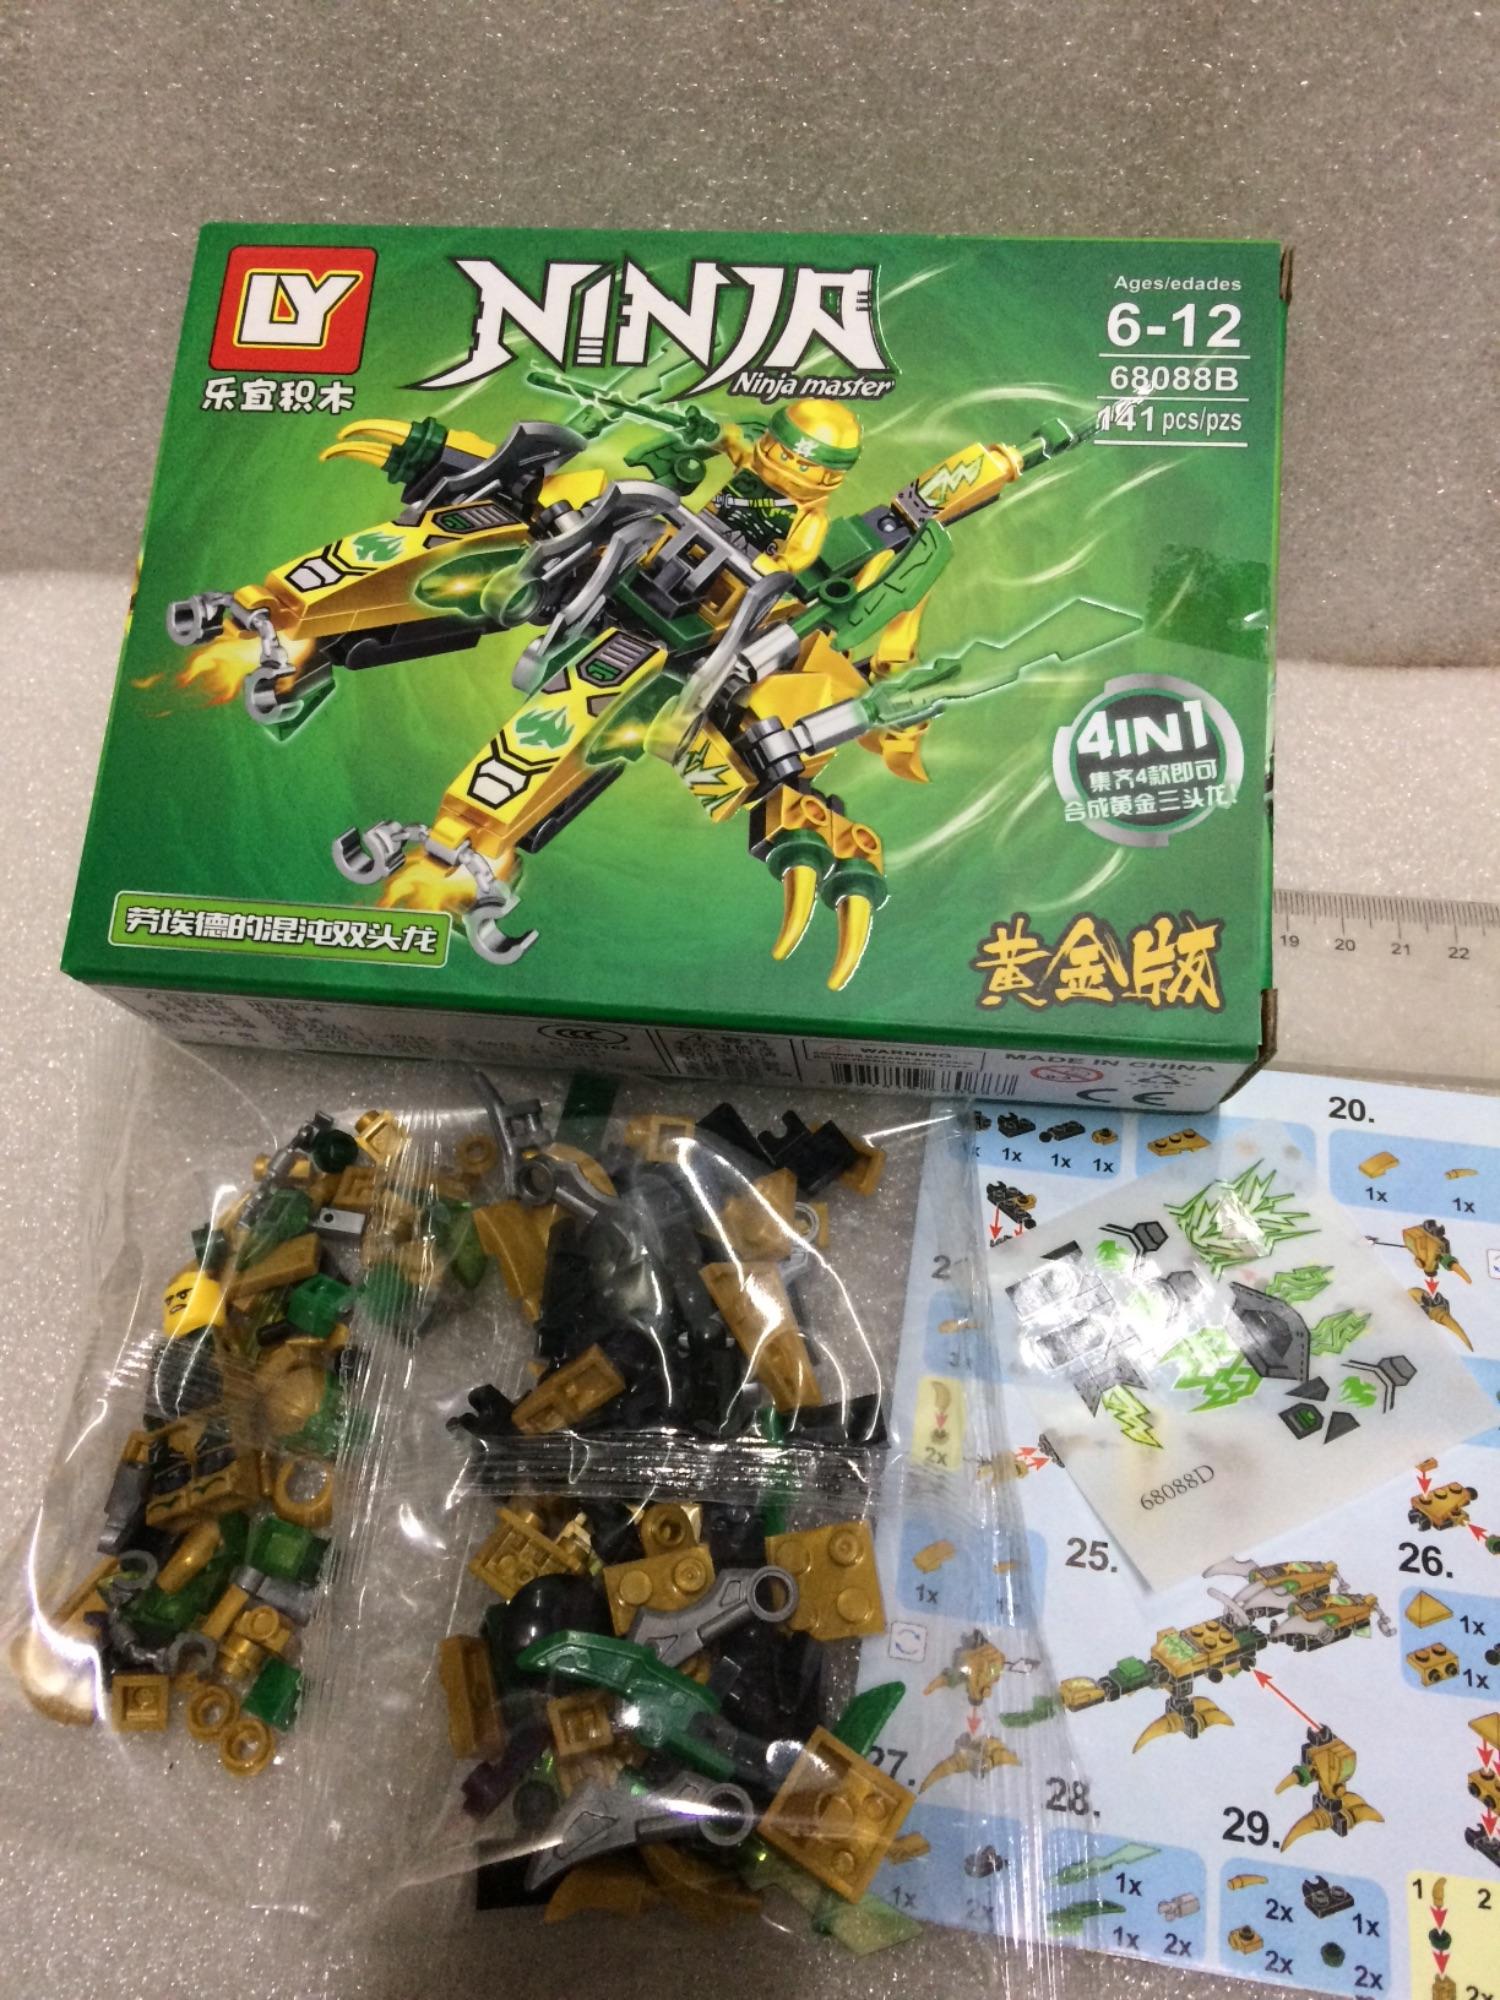 Lego lắp ghép SIÊU NINJA RỒNG (ninja master) model 68088B, 141 chi tiết